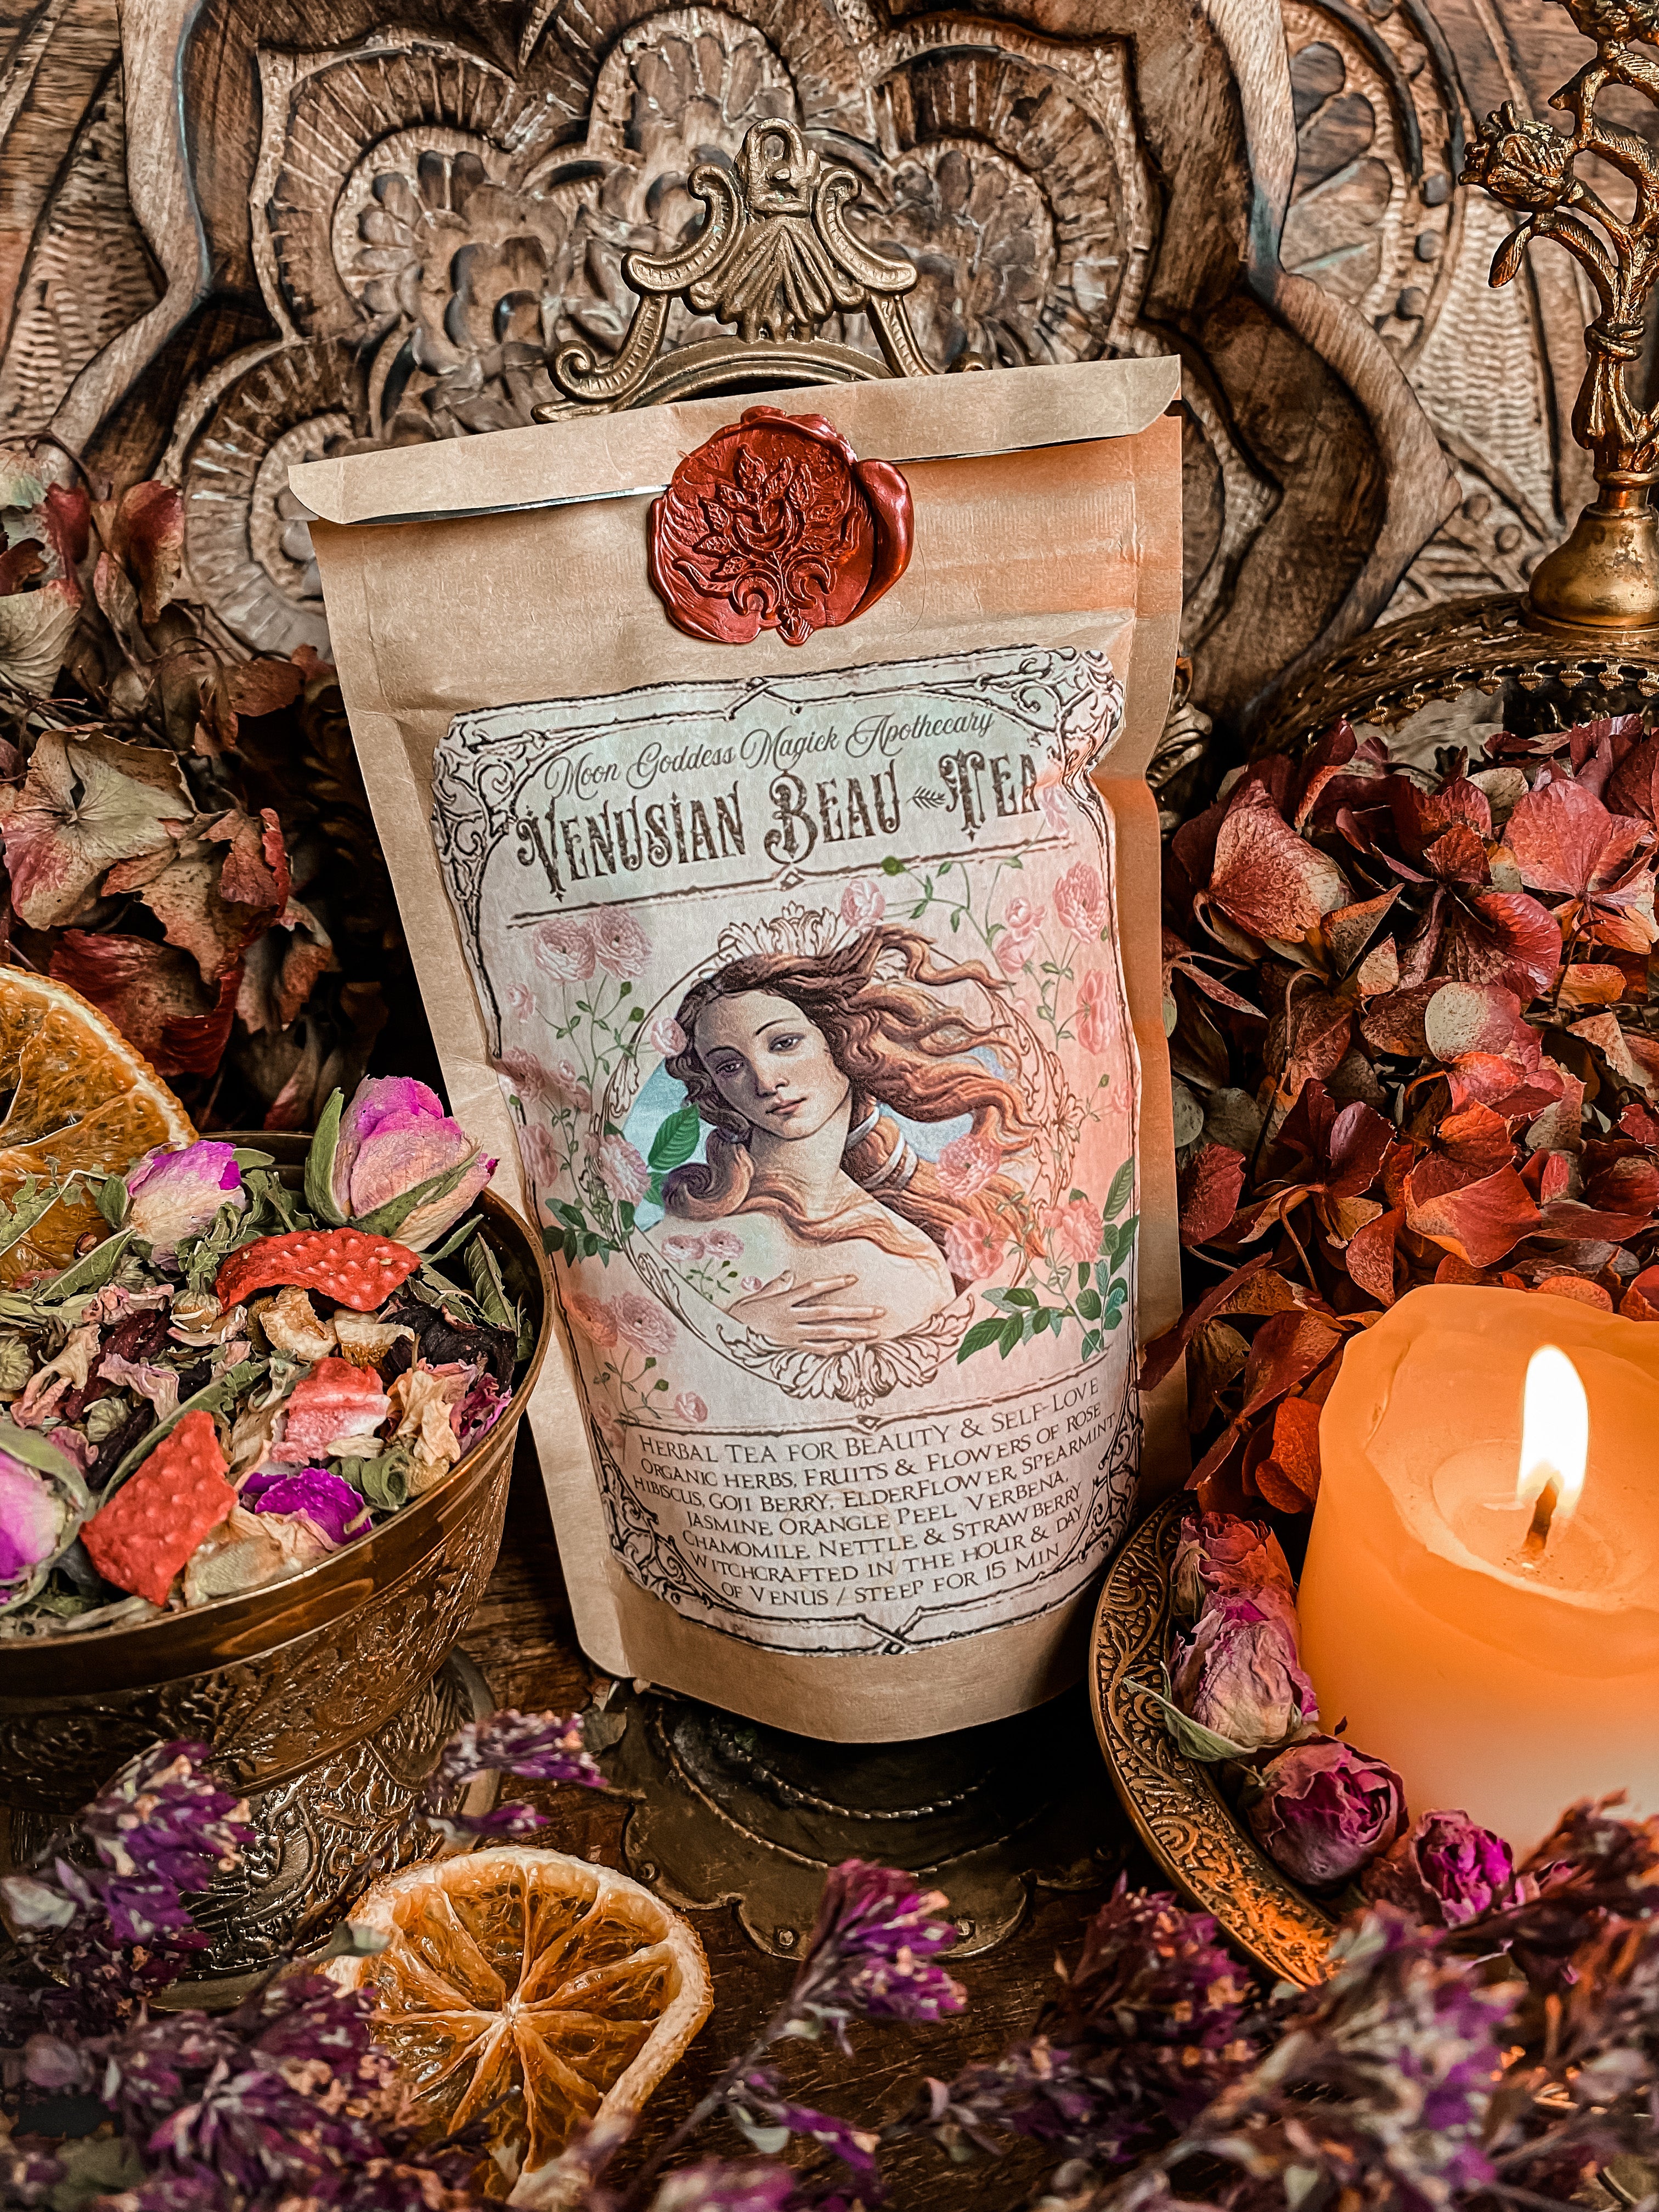 Venusian Beau-Tea /// Organic Herbal Tea For Beauty & Self-Love Rituals /// Good for Hair, Skin & Nails /// 8 oz glass Jar with Cork.